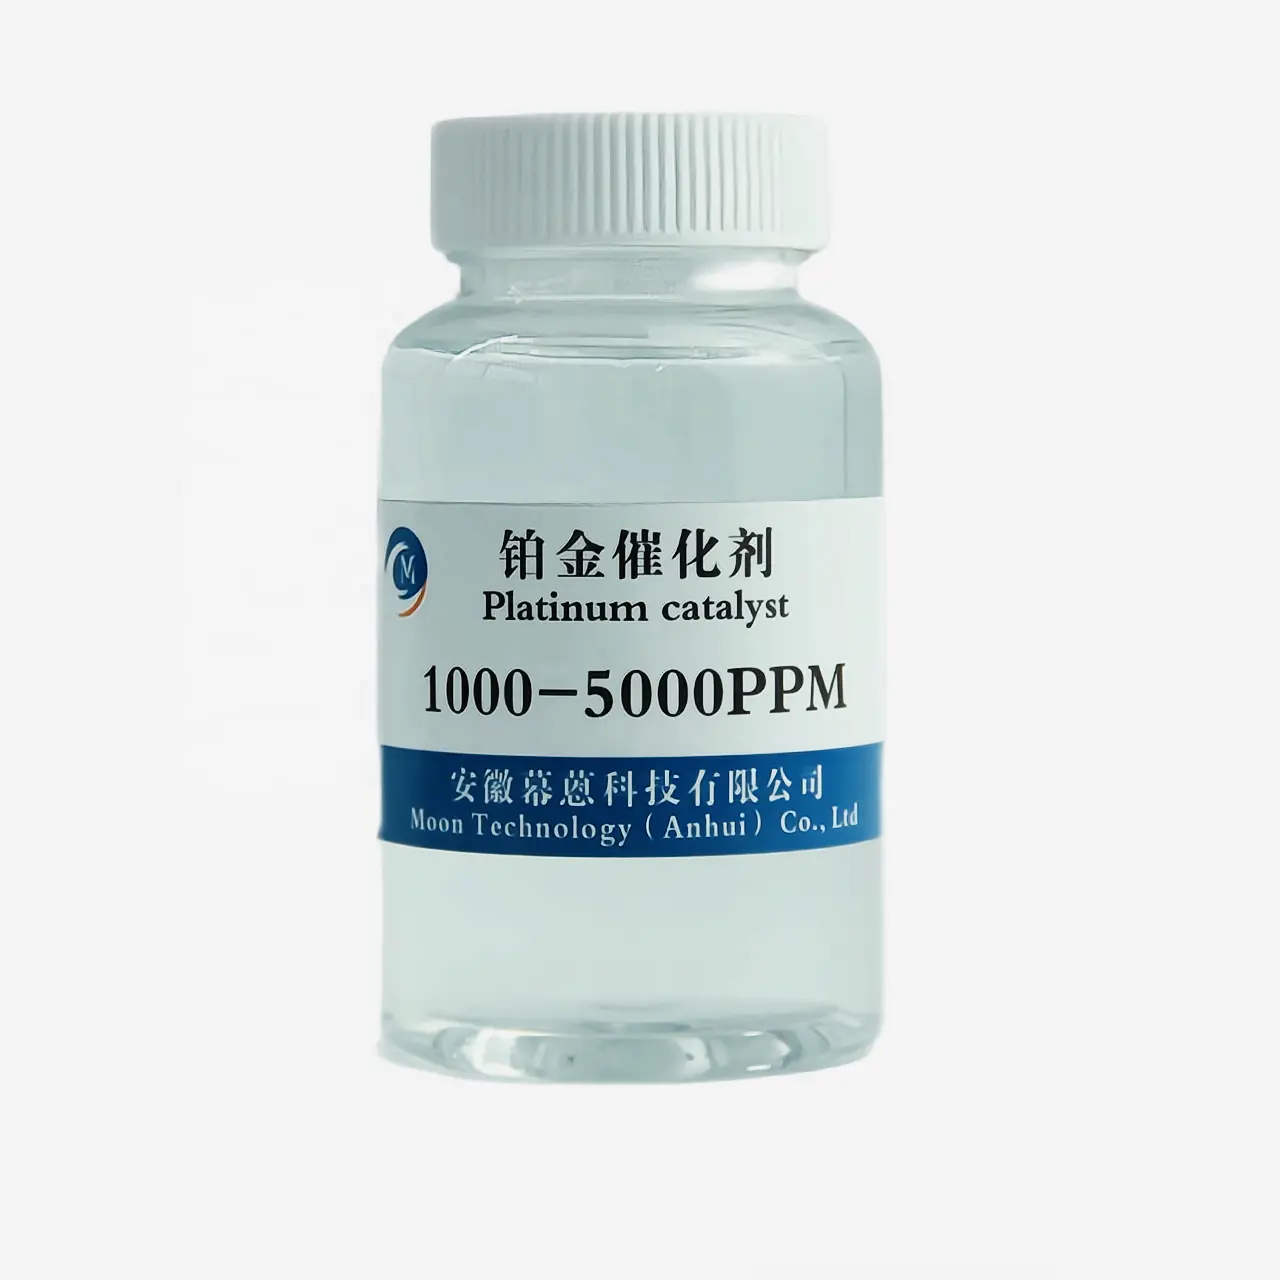 फैक्टरी मूल्य 500PPM 2000PPM 4000PPM 10000PPM प्लैटिनम उत्प्रेरक तरल सिलिकॉन इलाज एजेंट CAS संख्या 68478-92-2